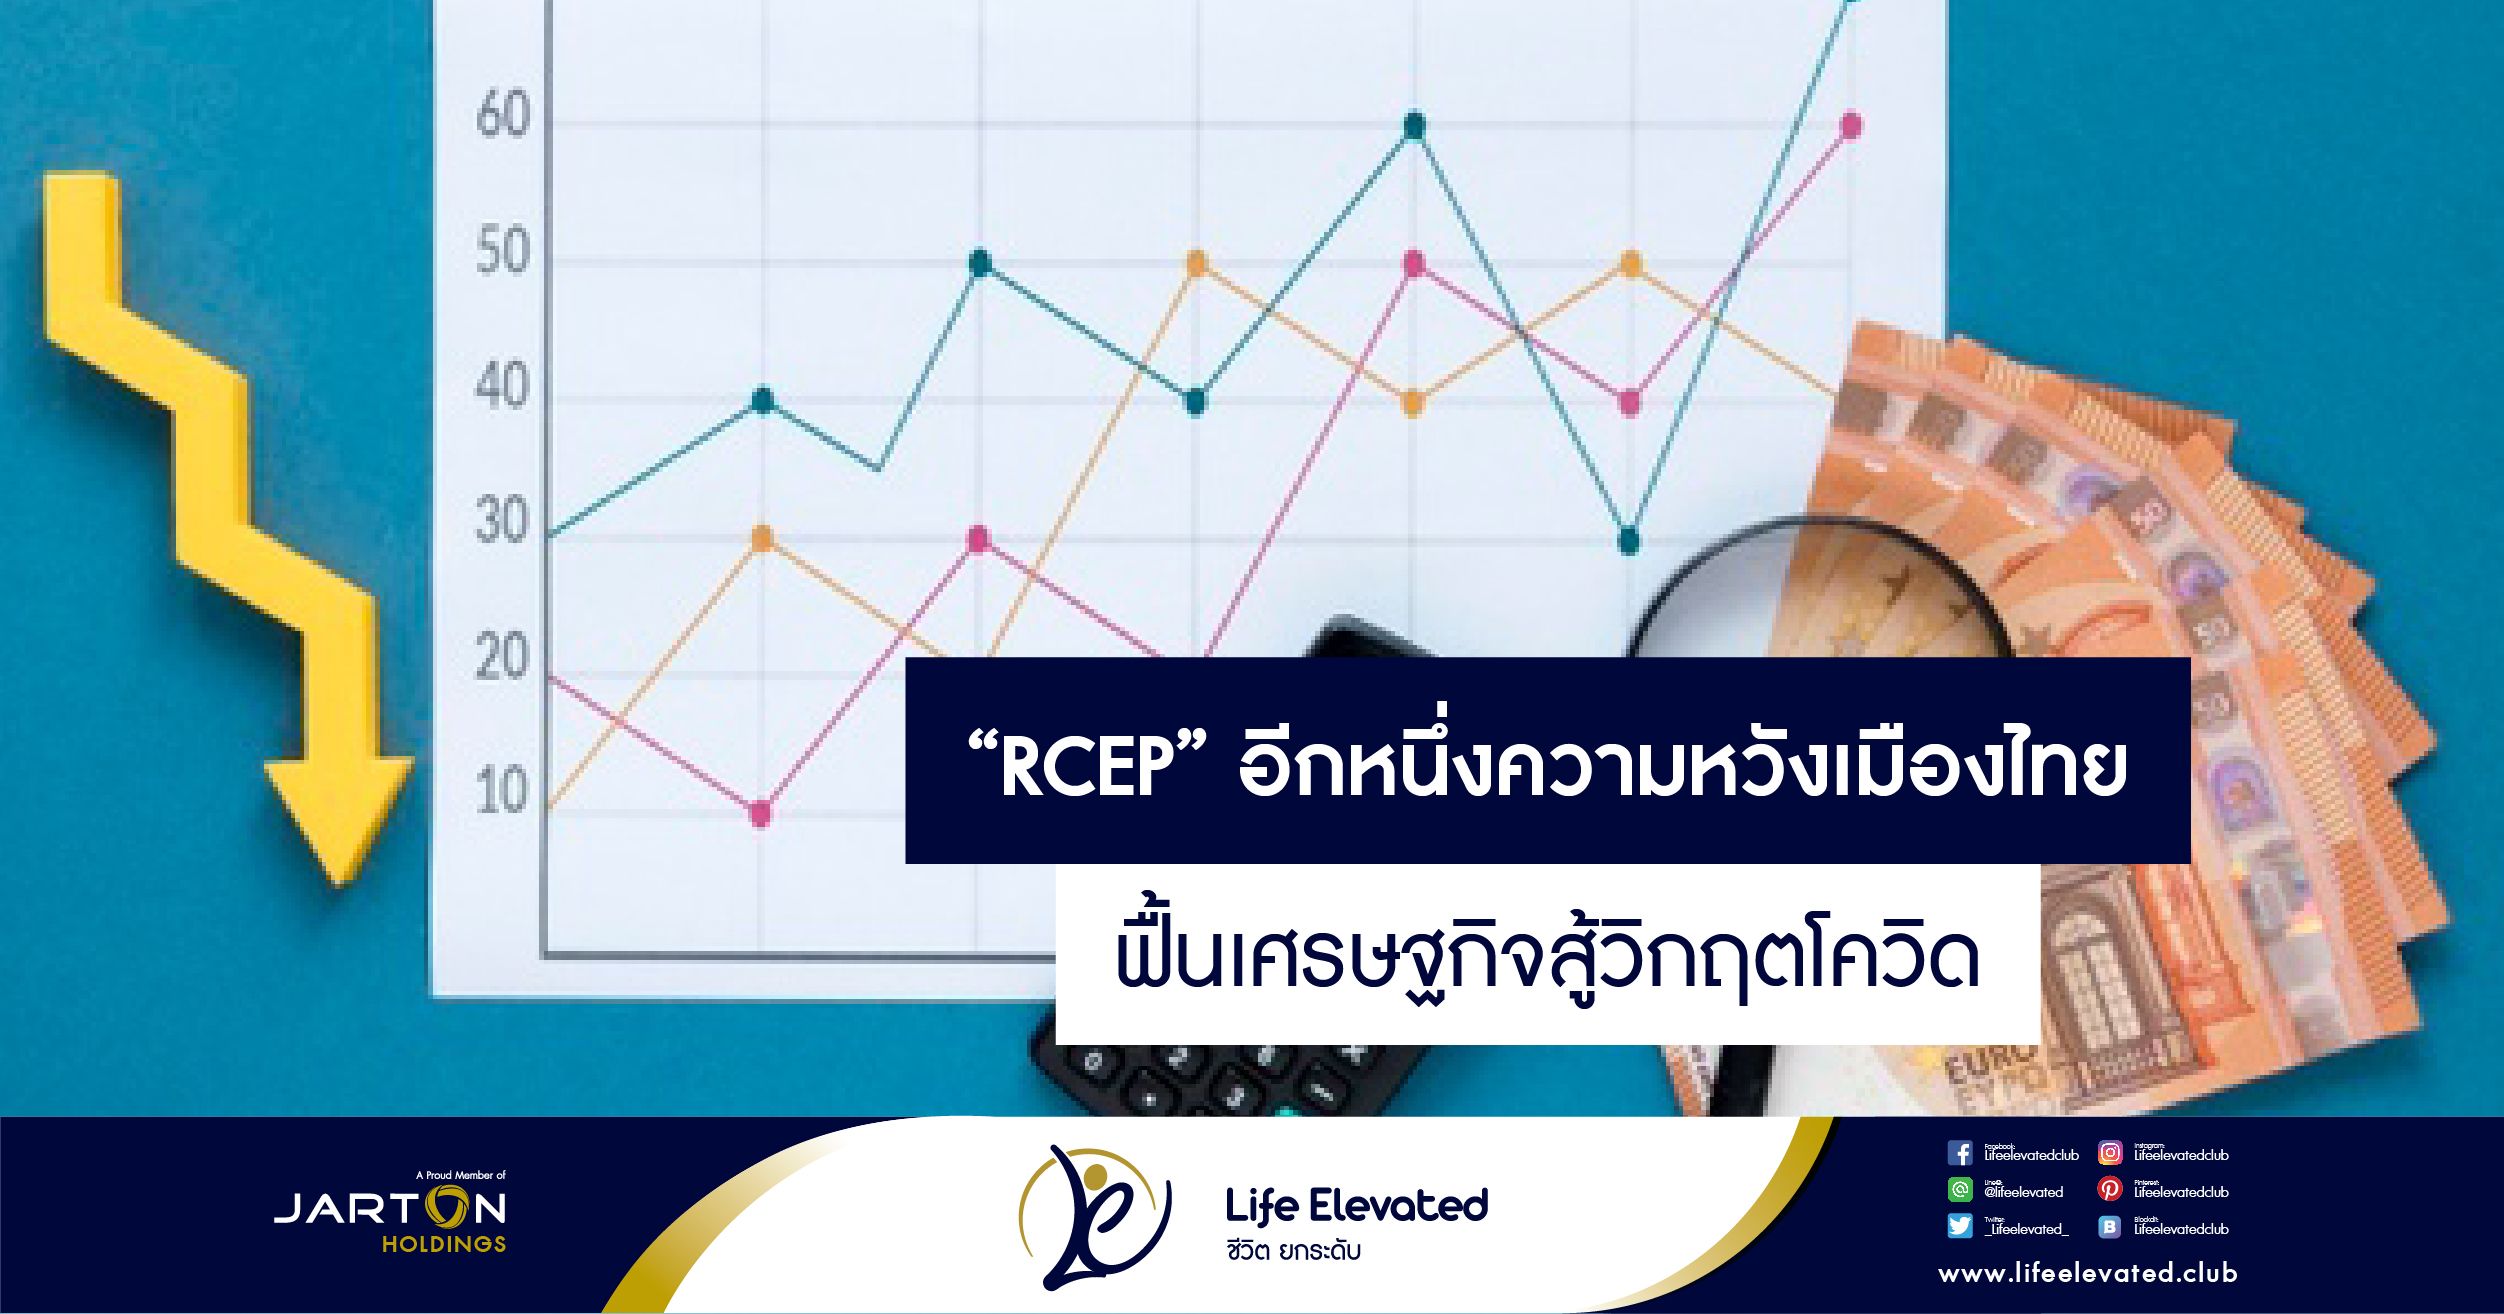 ‘RCEP’ อีกหนึ่งความหวังเมืองไทย ฟื้นเศรษฐกิจสู้วิกฤตโควิด 